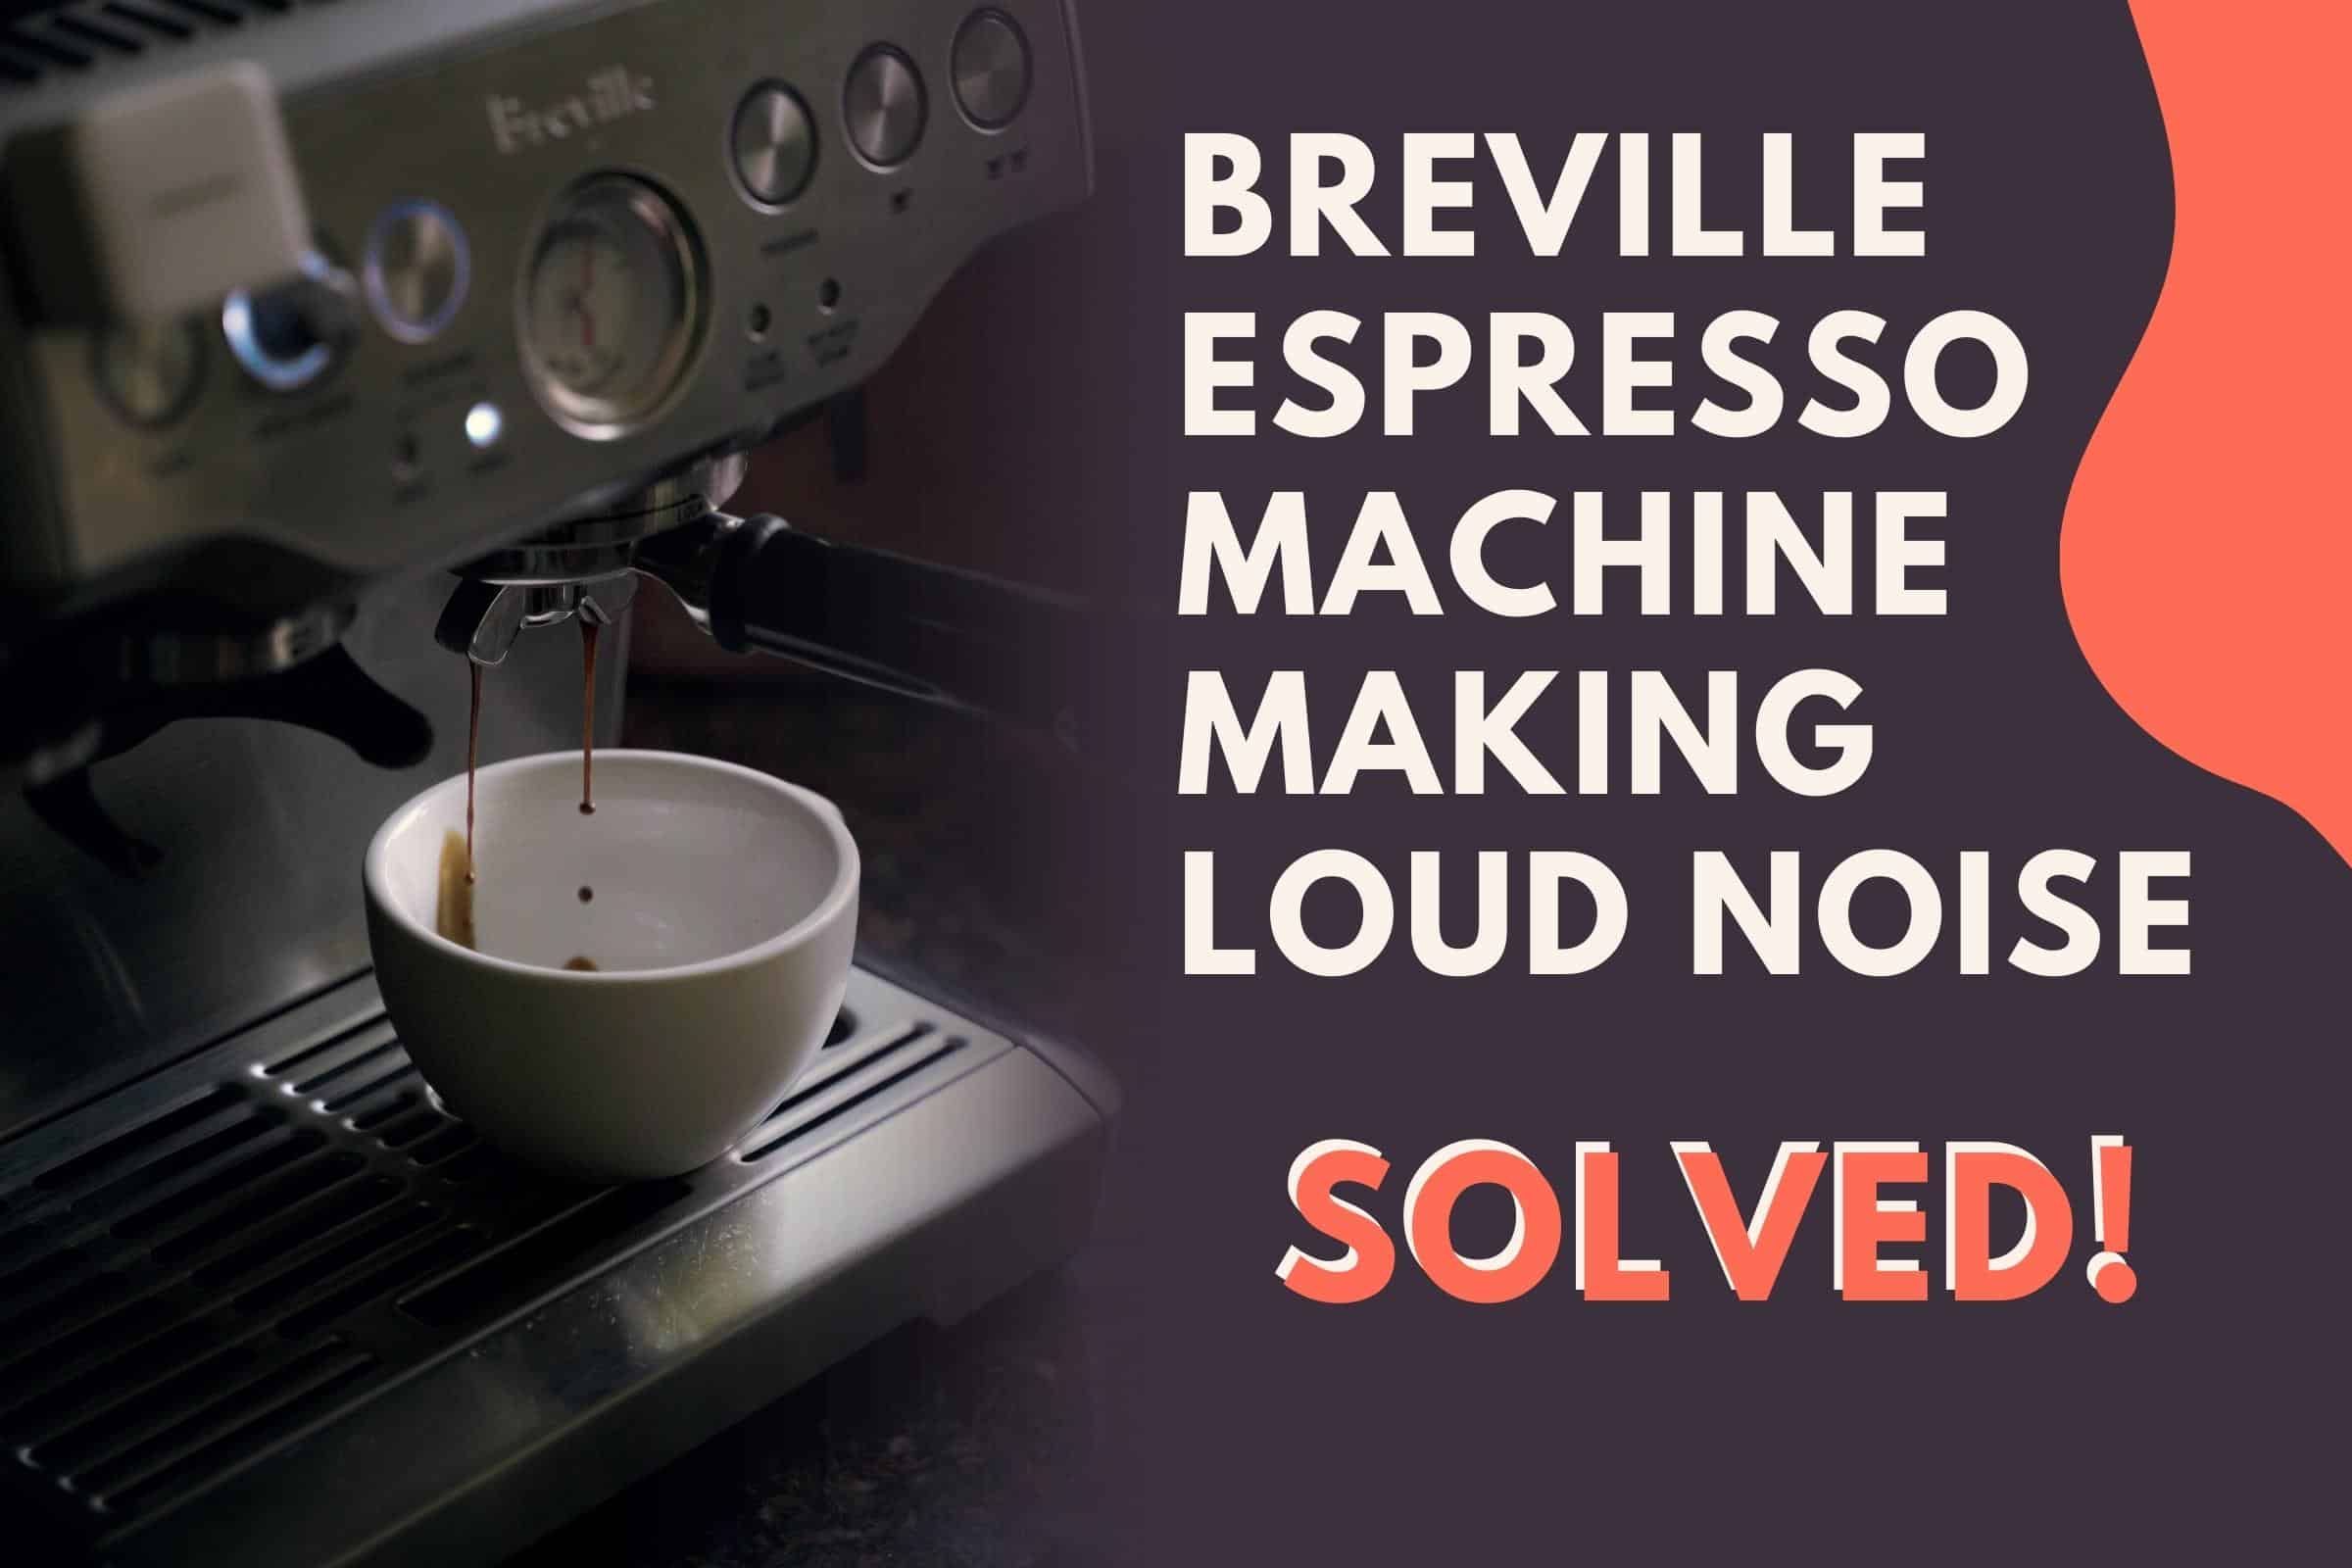 Breville Espresso Machine making loud noise